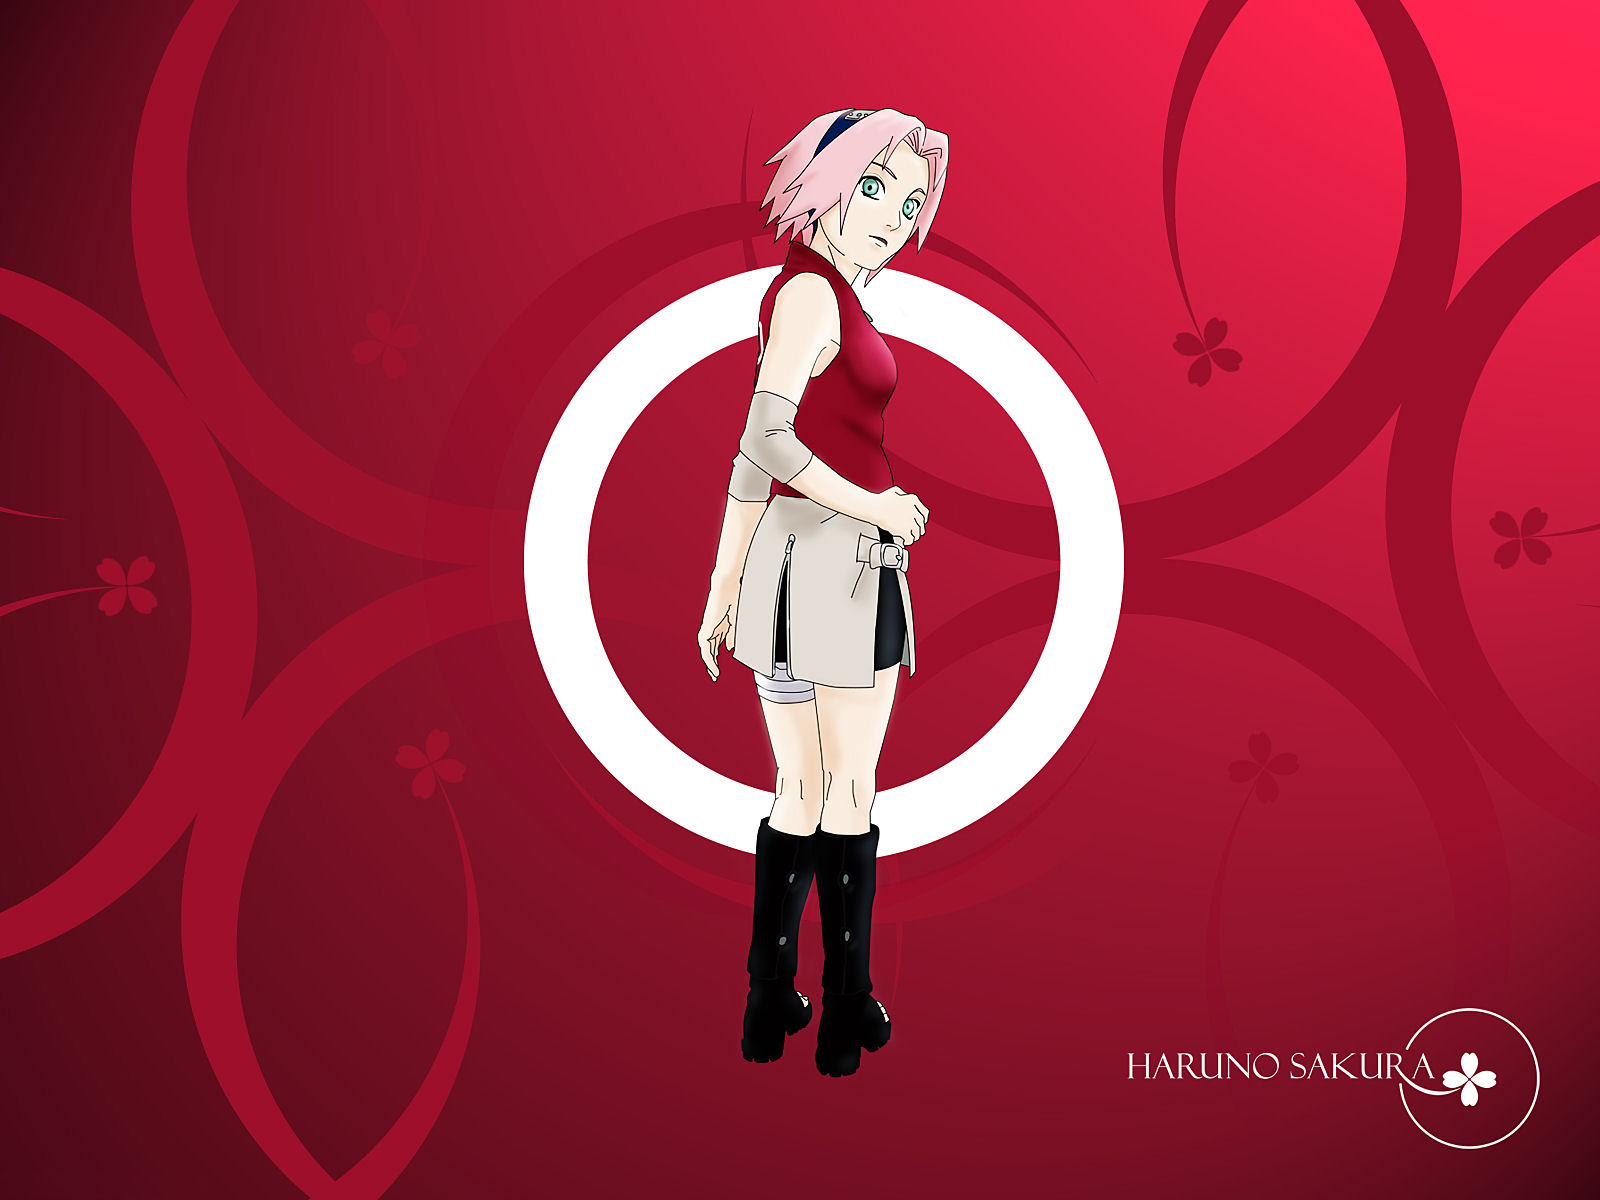 Sakura Haruno from Naruto in an anime-inspired desktop wallpaper.